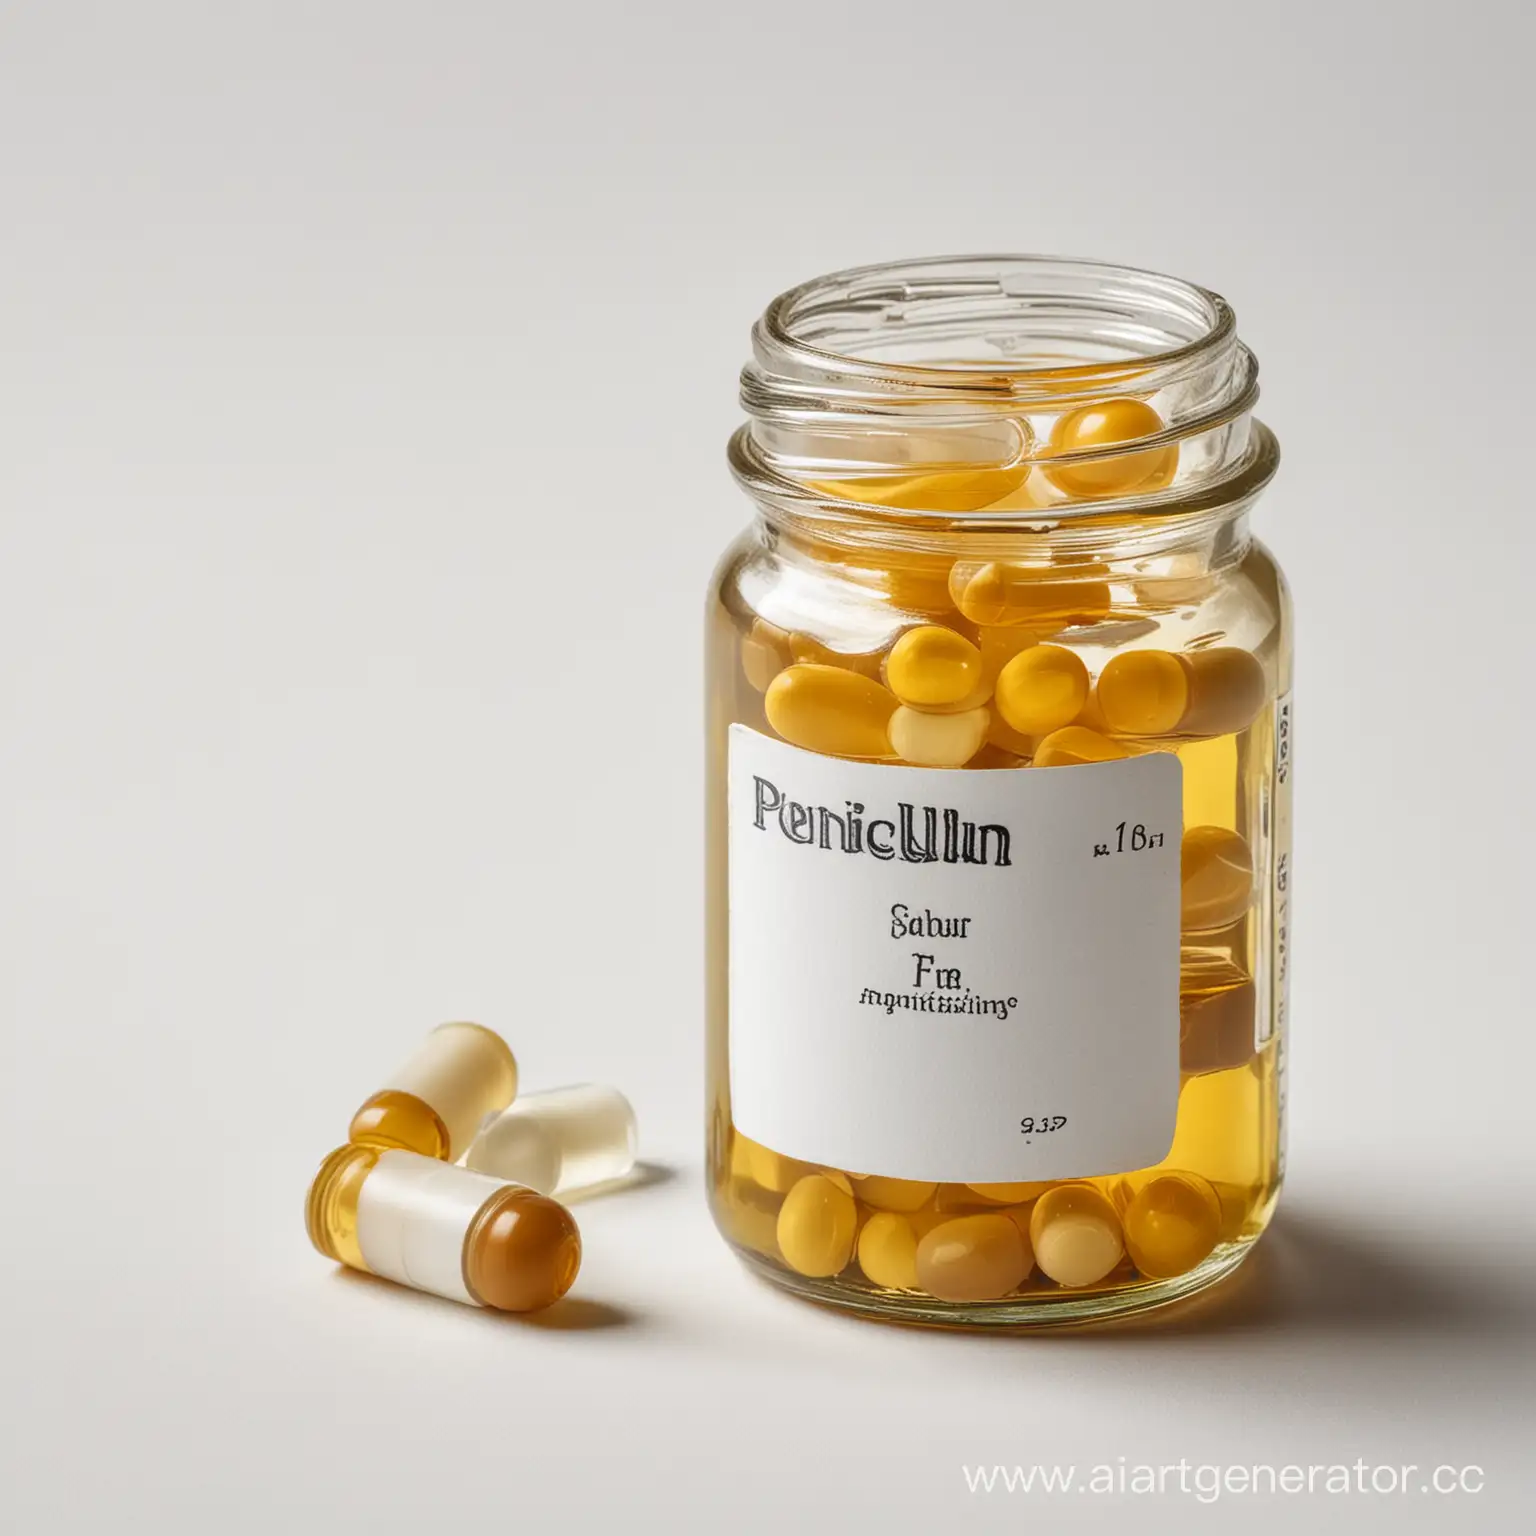 Antibiotic-Power-Penicillin-in-Vintage-Jar-on-Pristine-White-Background